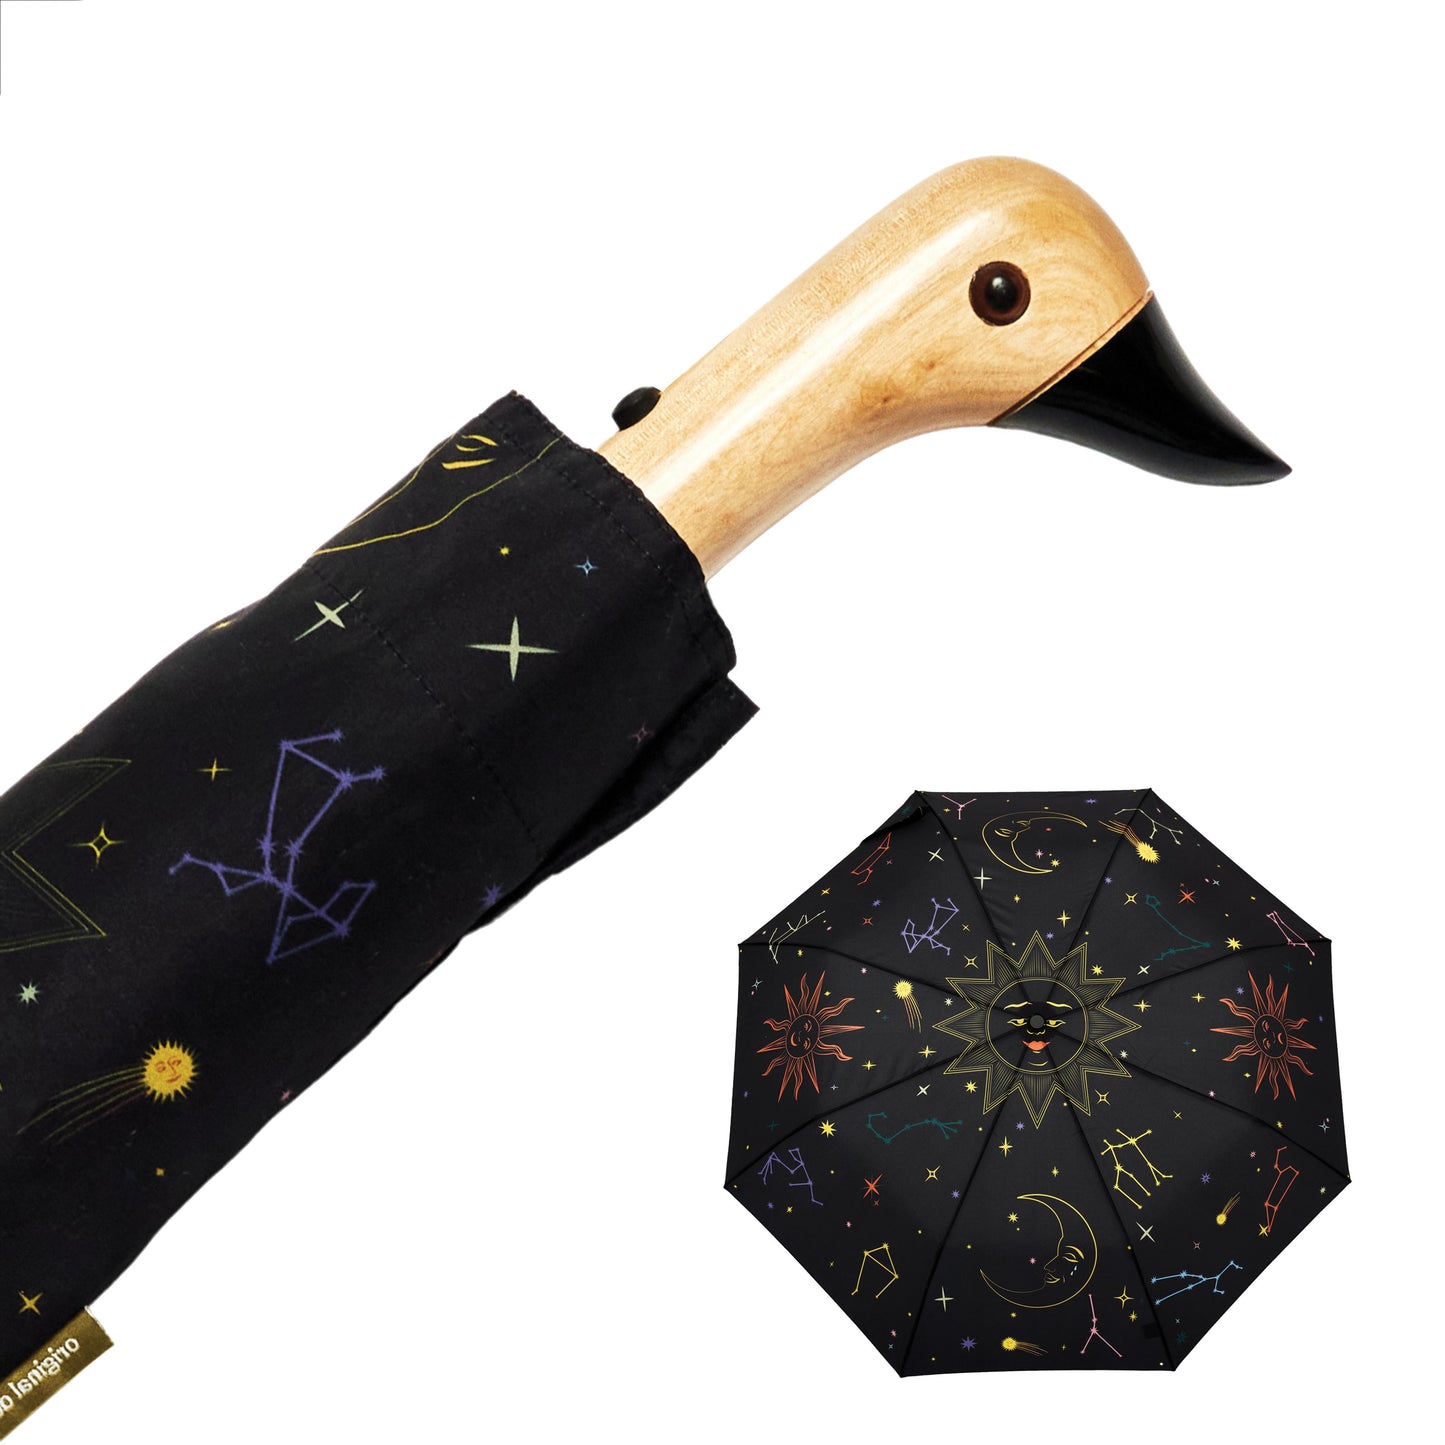 Original Duckhead Umbrella | Zodiac